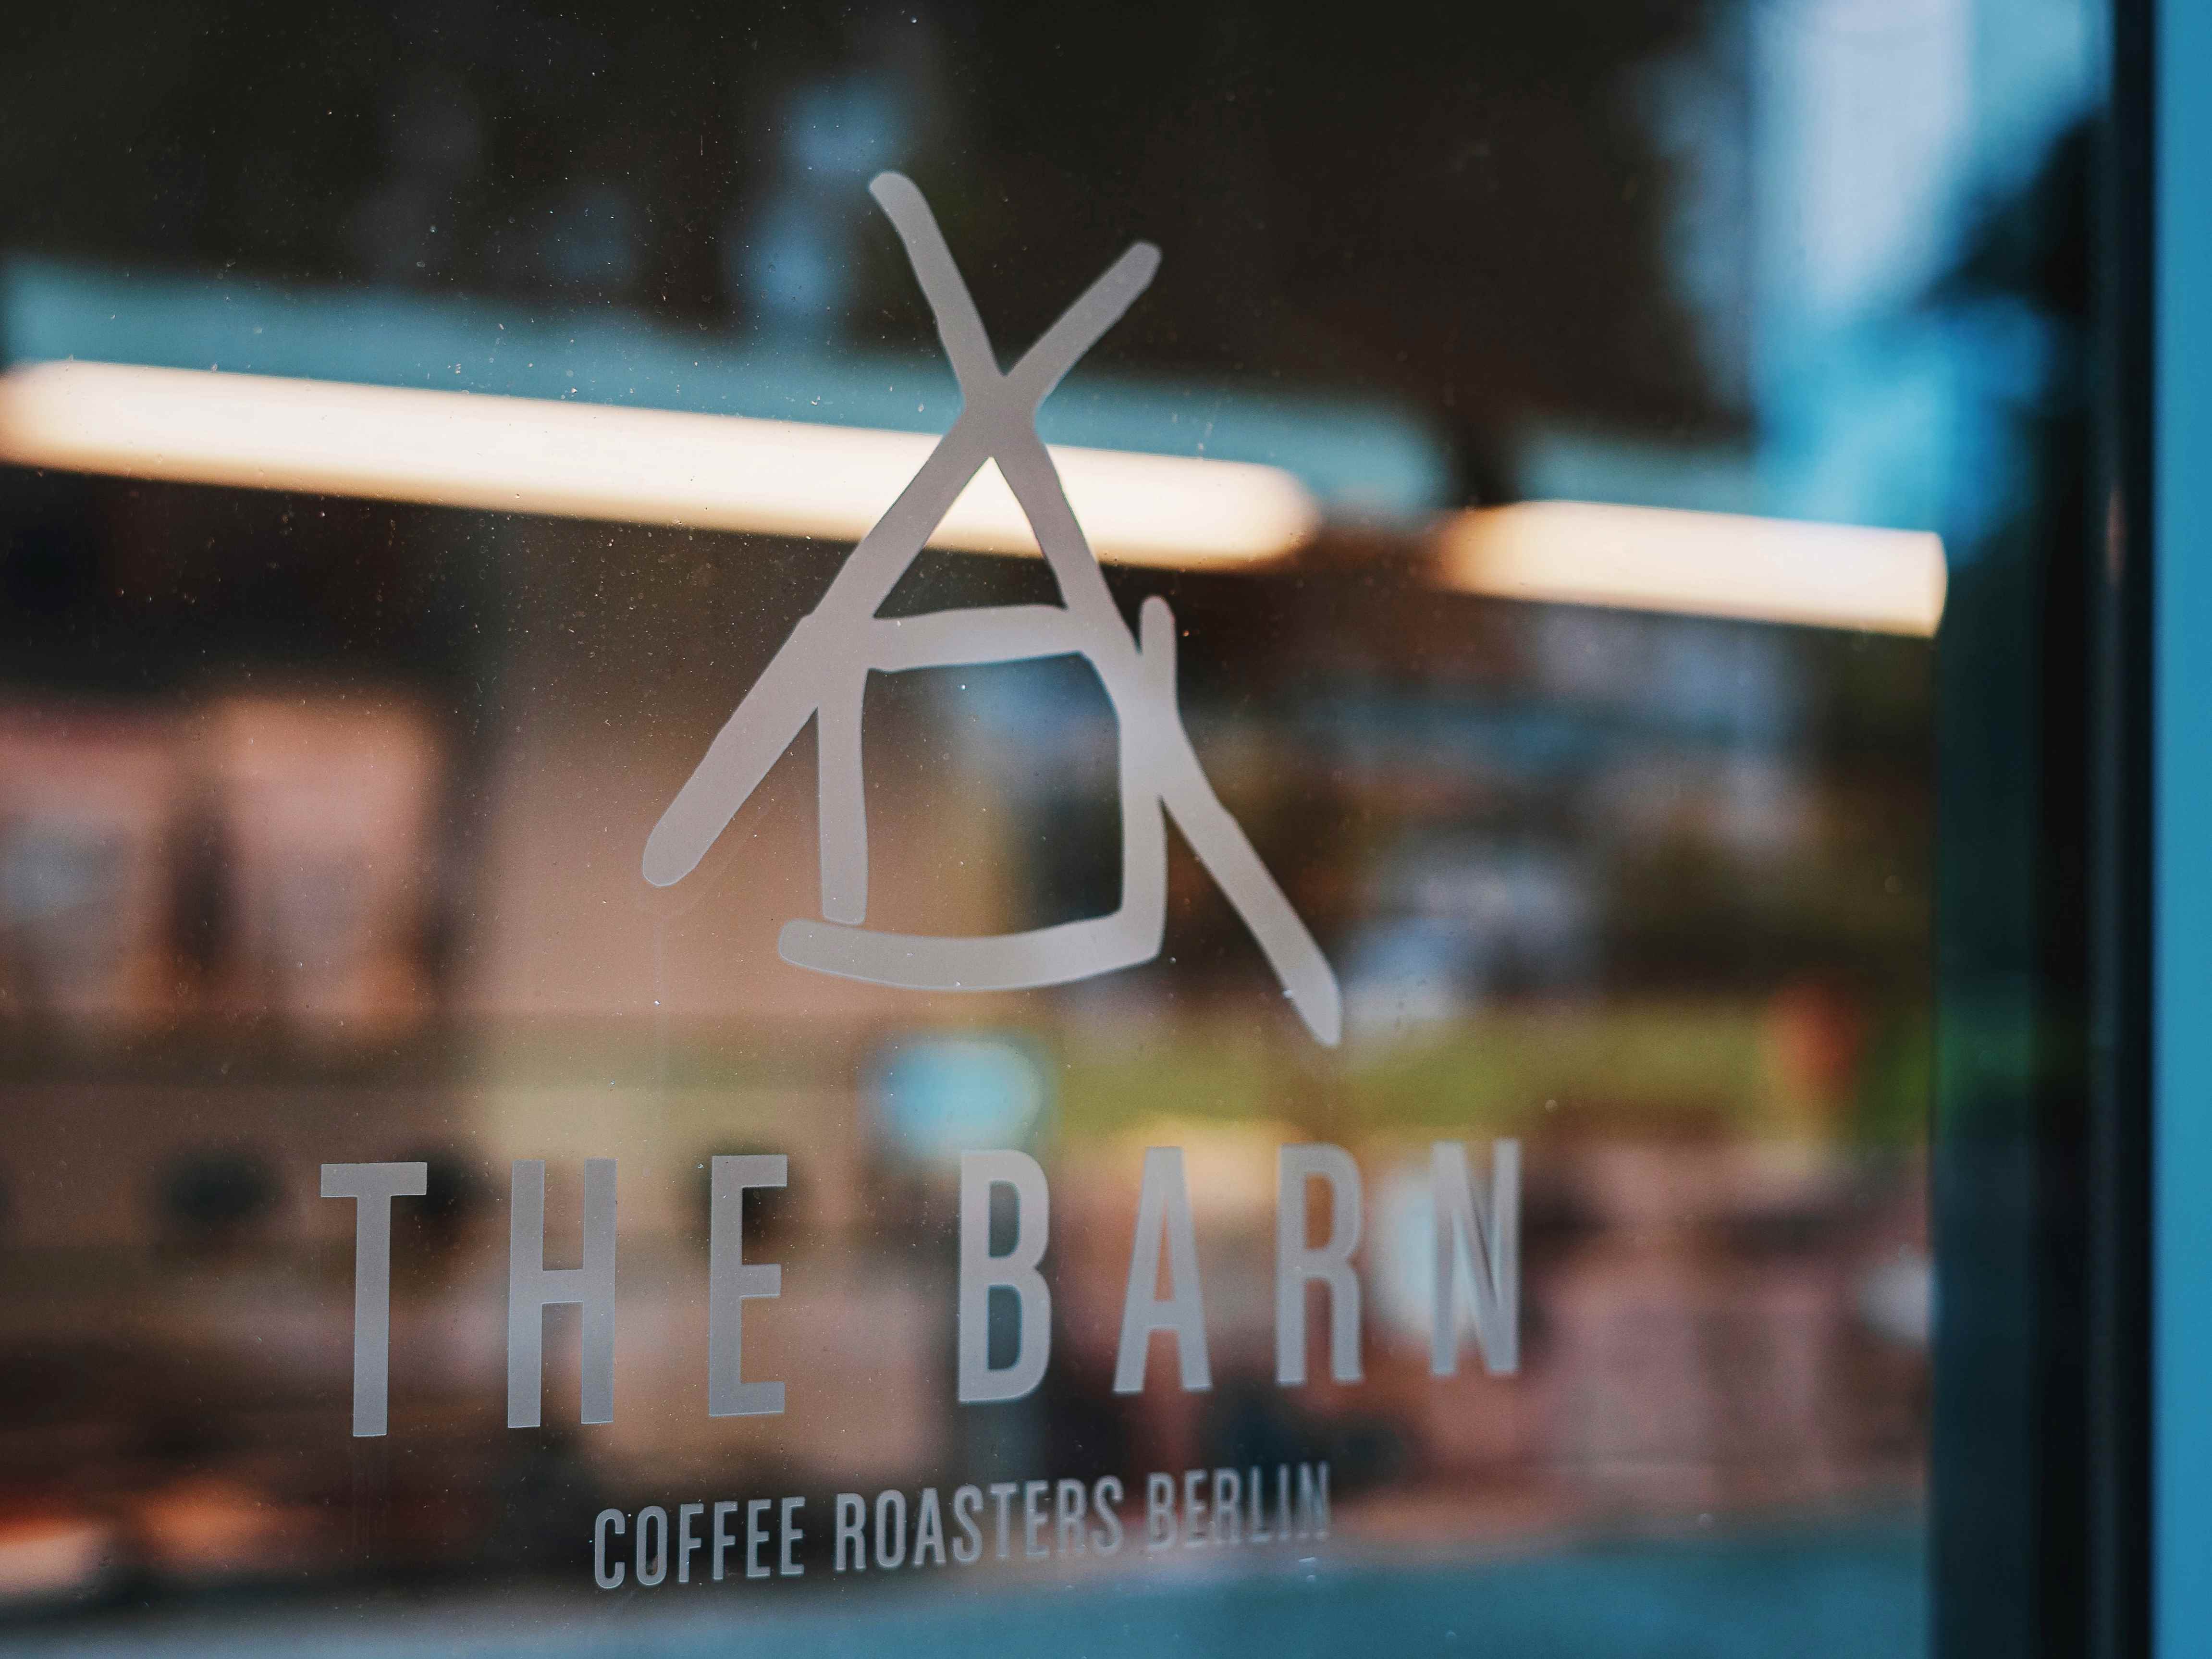 The Barn Coffee Roasters im Center am Potsdamer Platz 